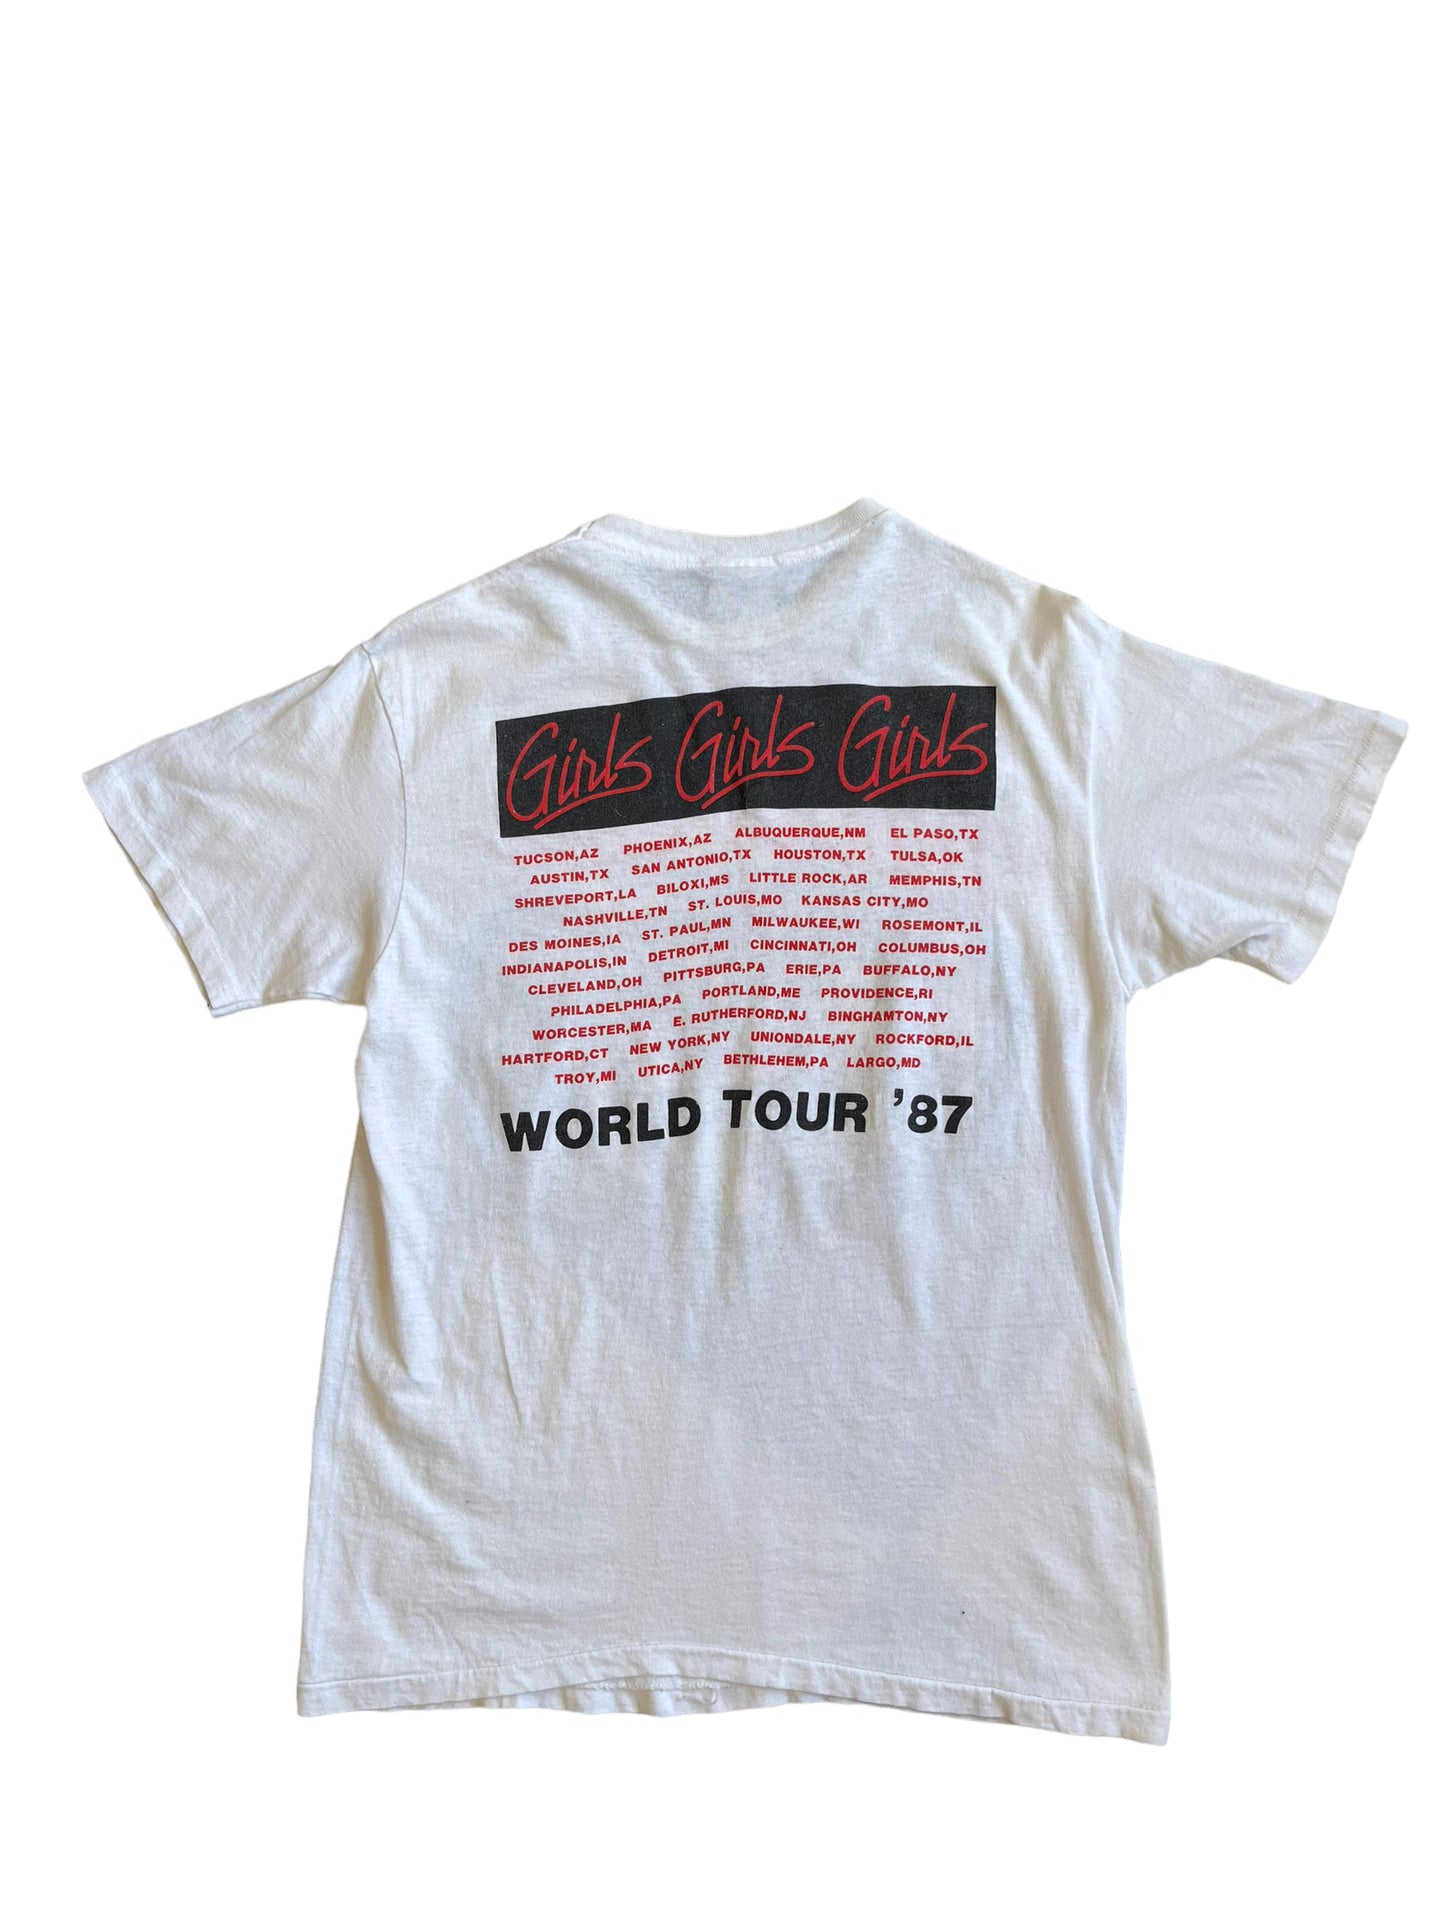 (L) 1987 Motley Crue Girls Girls Girls Tour Tee